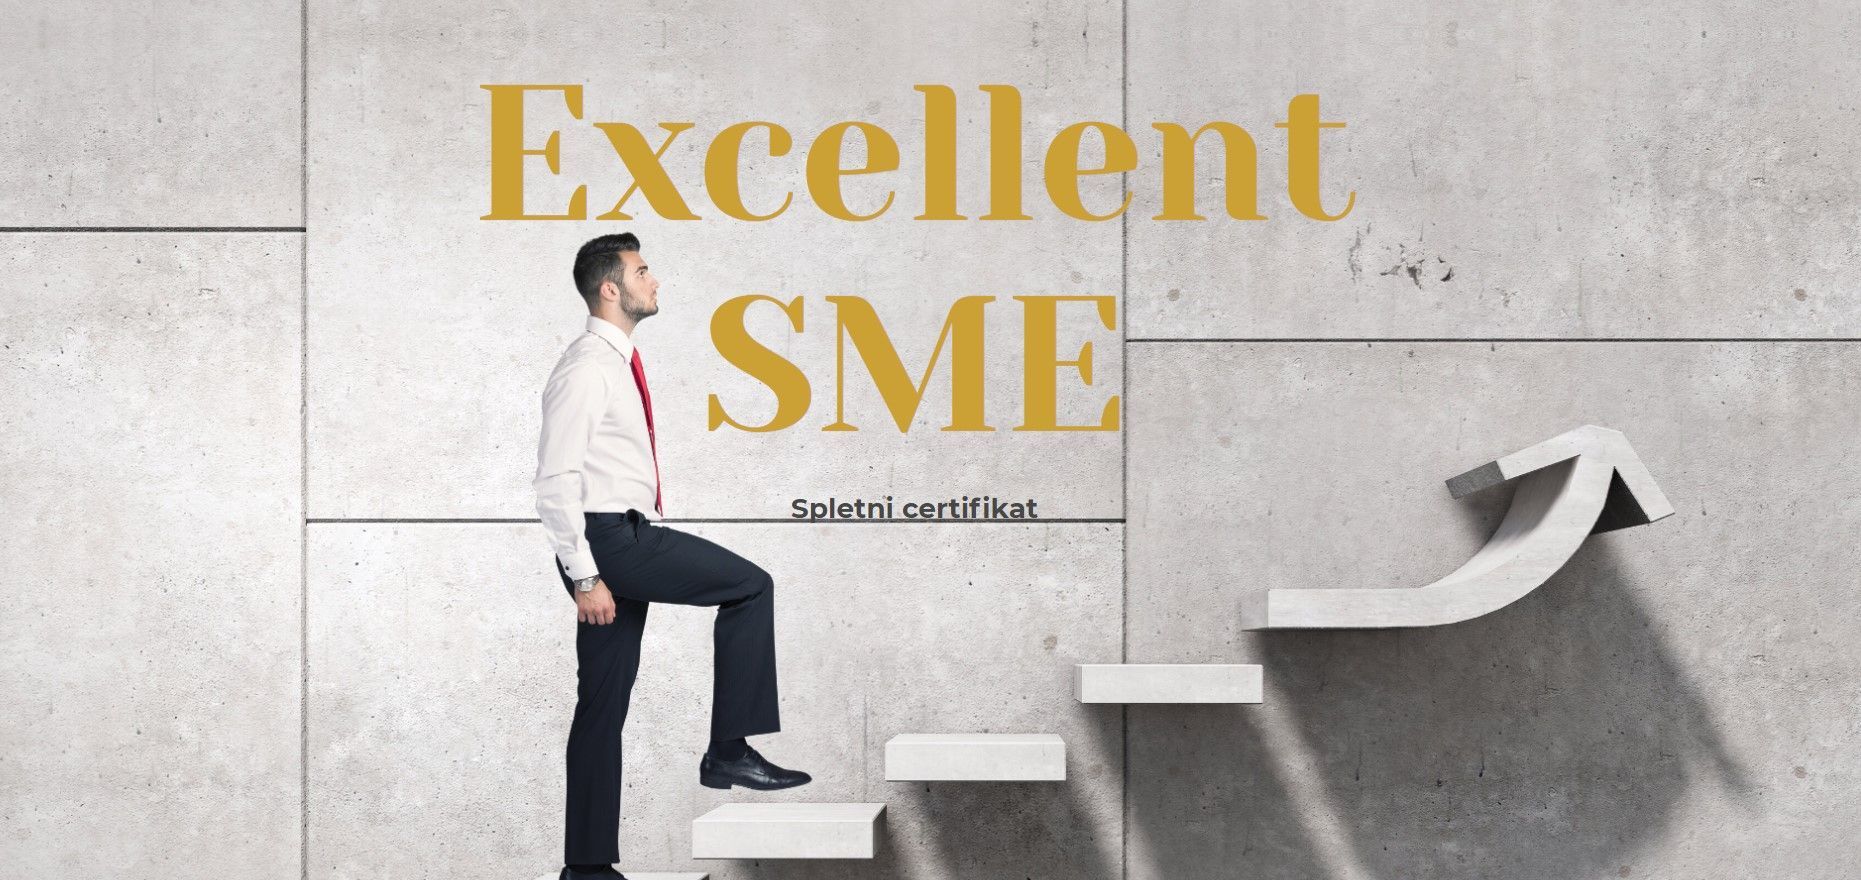 Winner of Excellent SME Slovenia Certificate